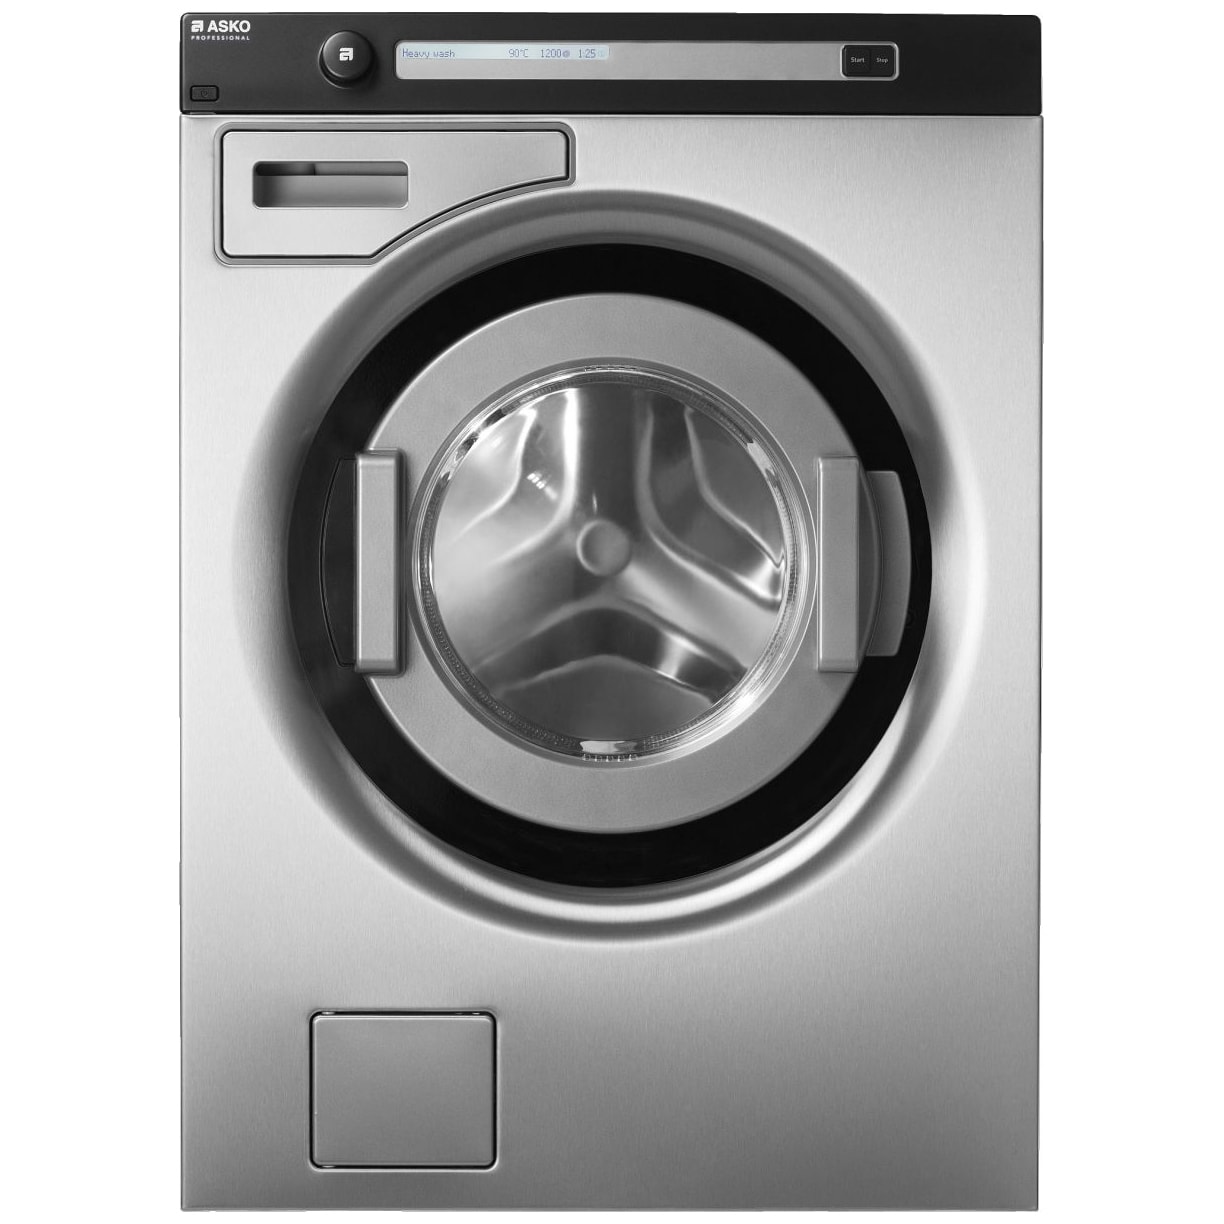 overskæg Sammenligning Tryk ned Asko Professional vaskemaskine WMC743 PS | Elgiganten